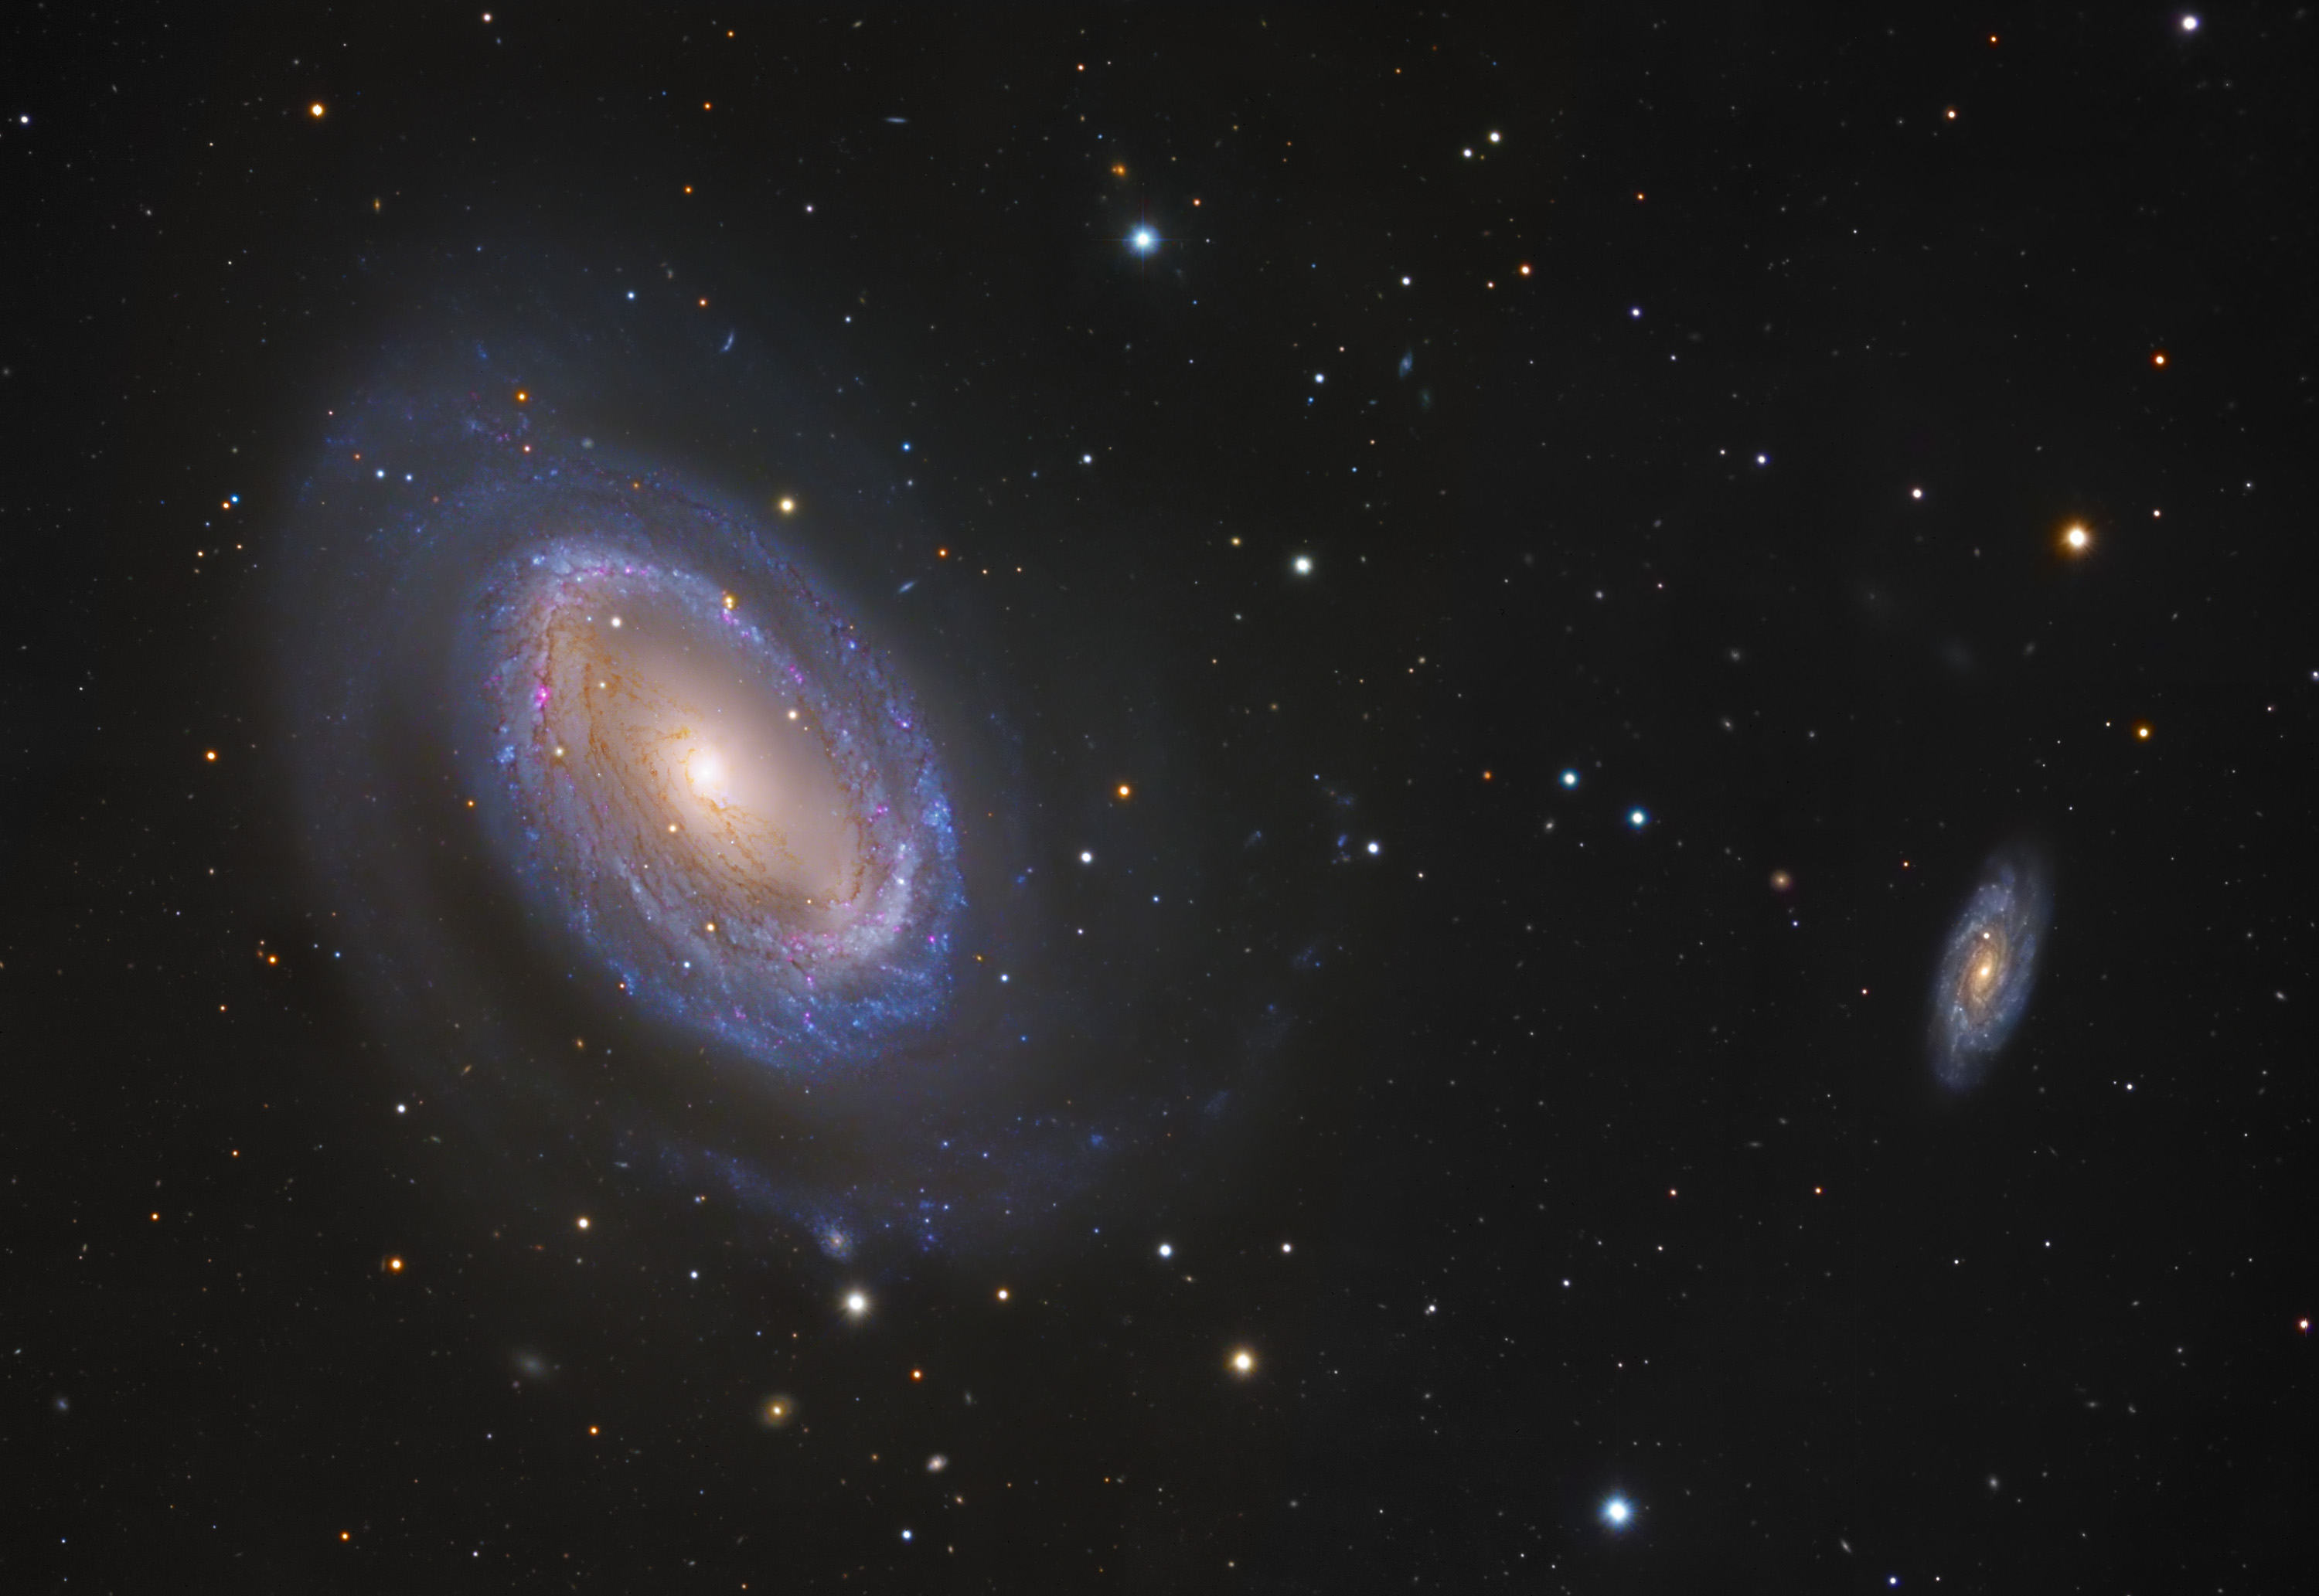 APOD: 2013 May 30 - One Armed Spiral Galaxy NGC 4725